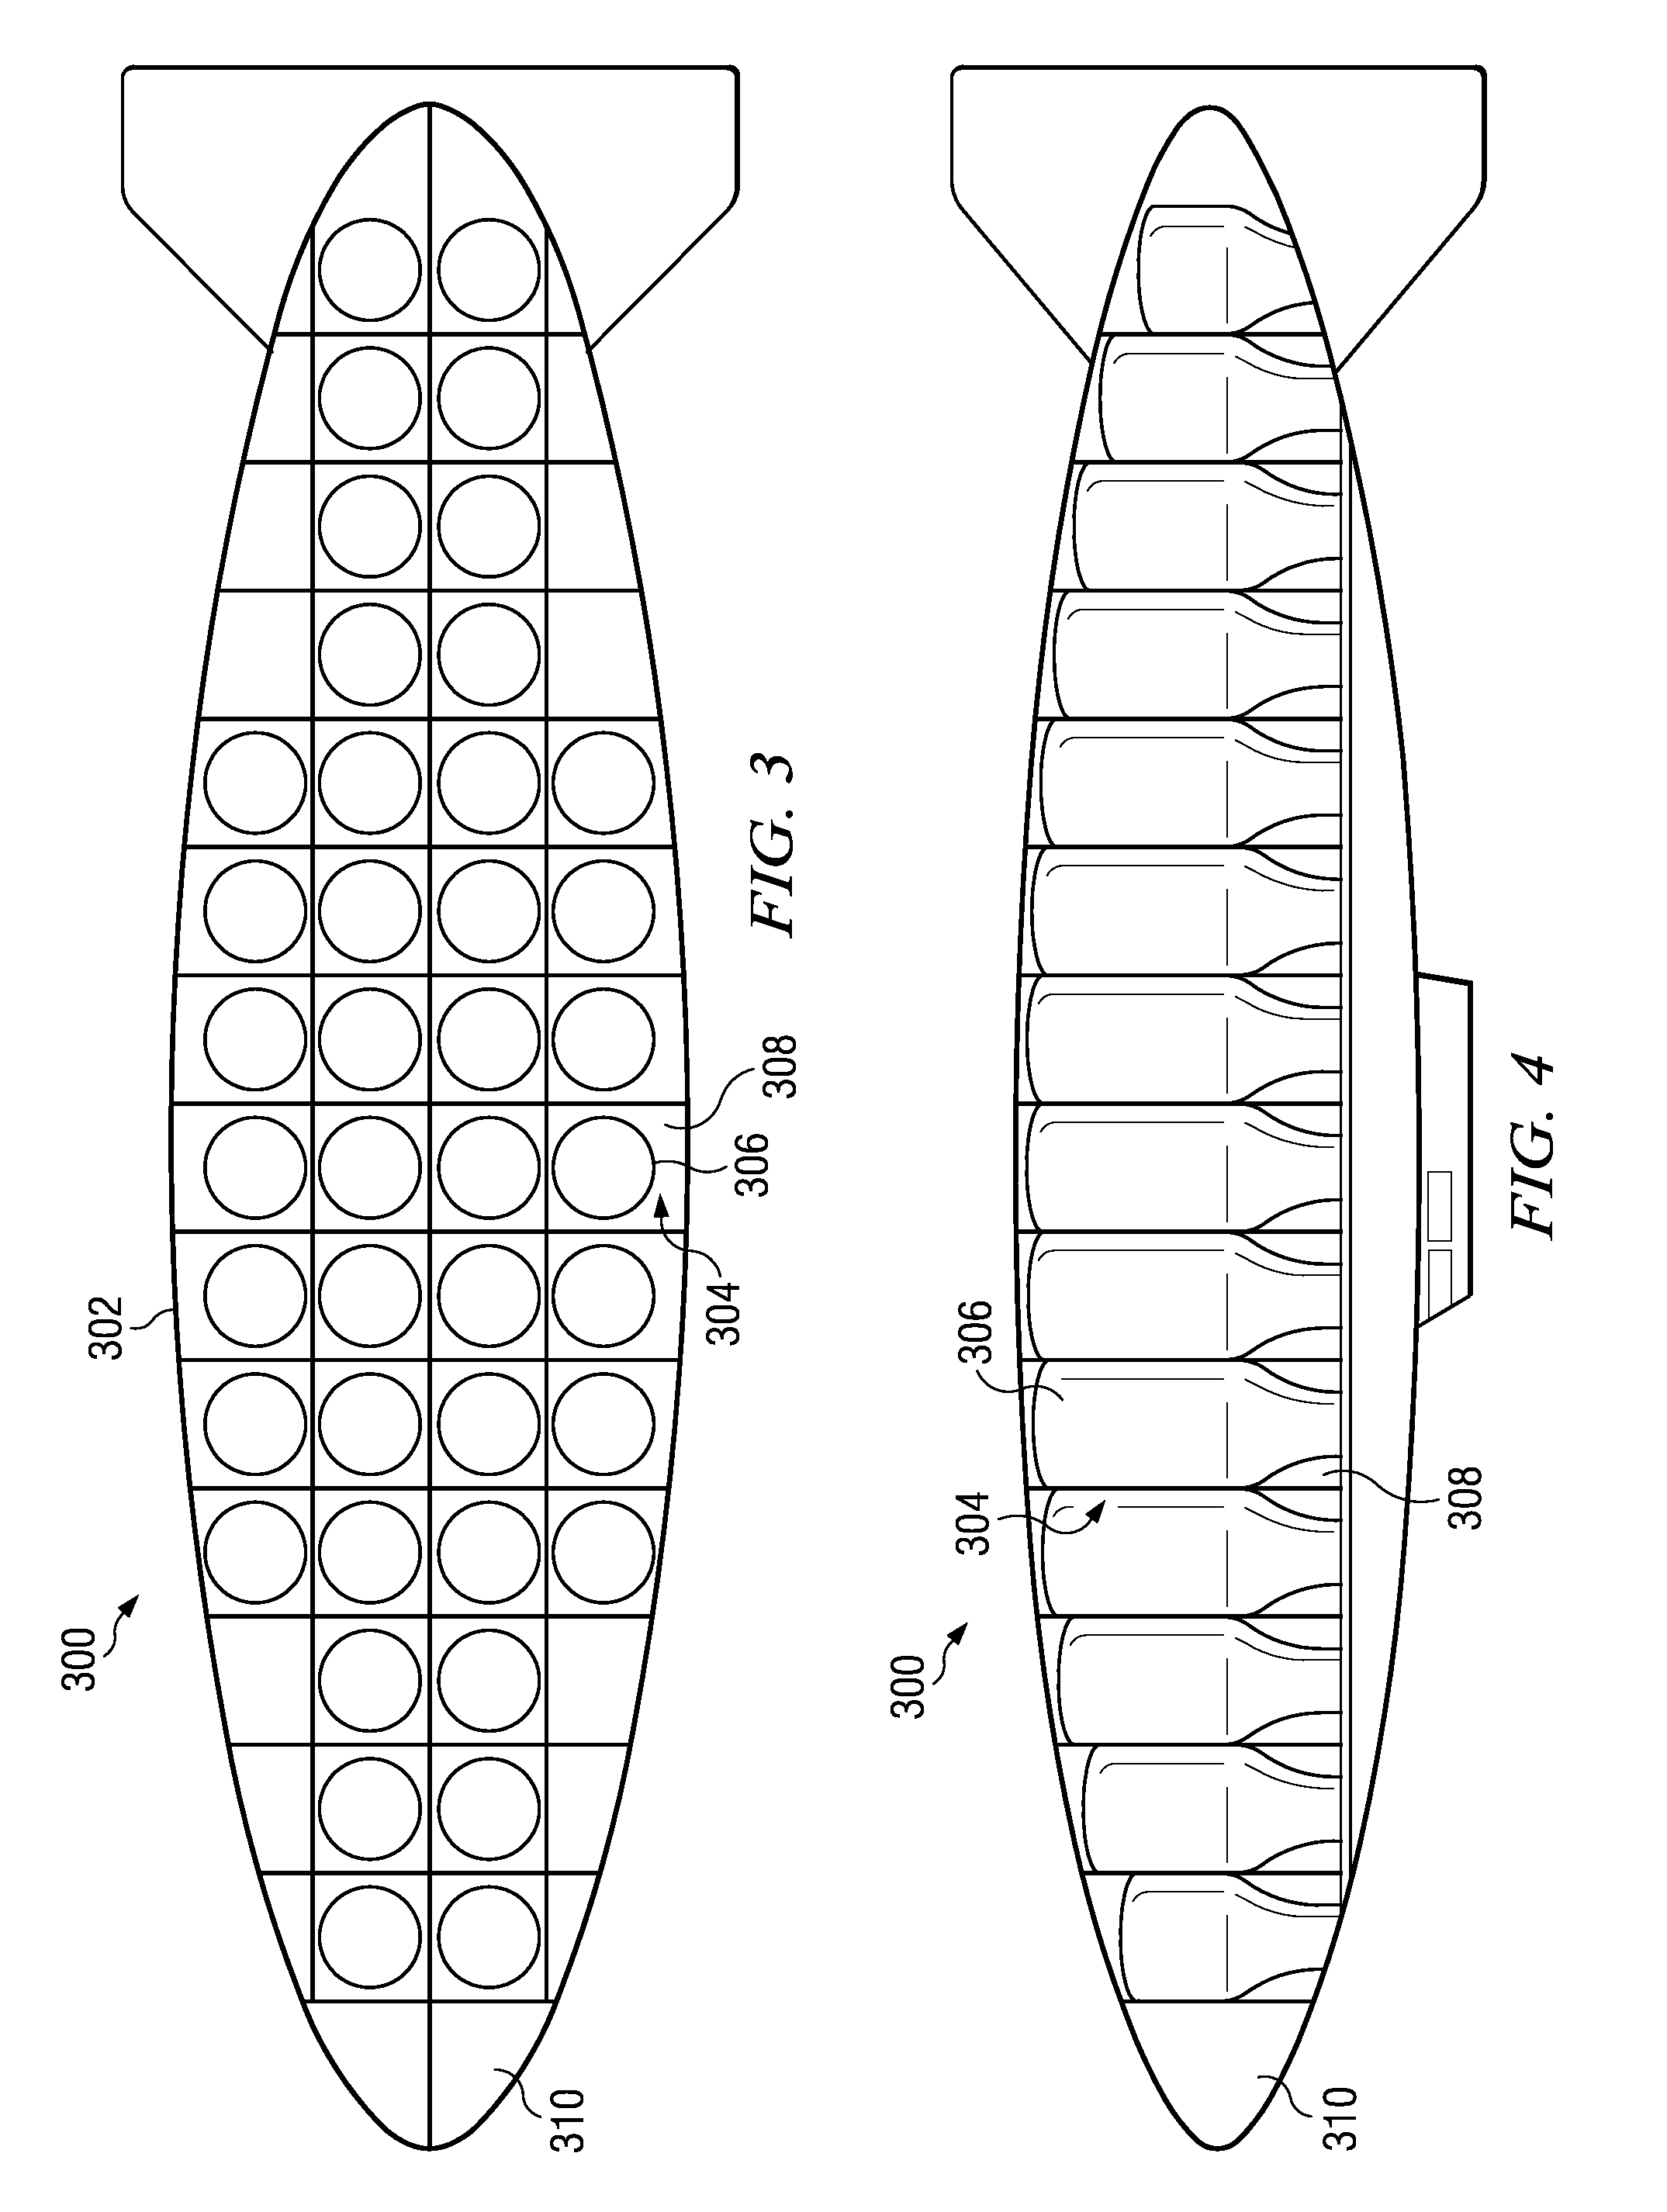 Bi-convex airship